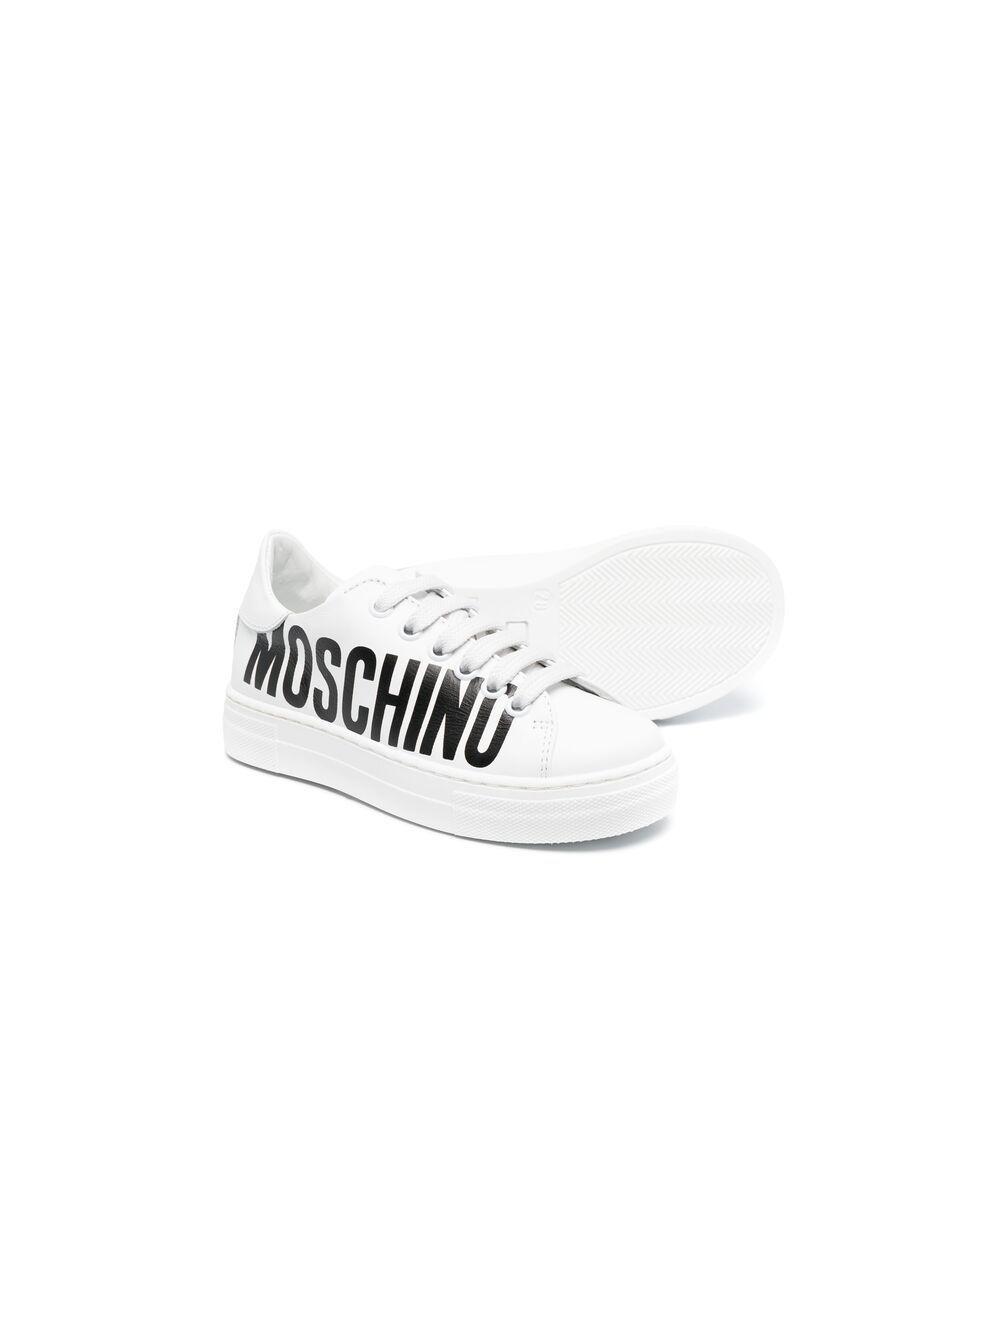 фото Moschino кроссовки с логотипом